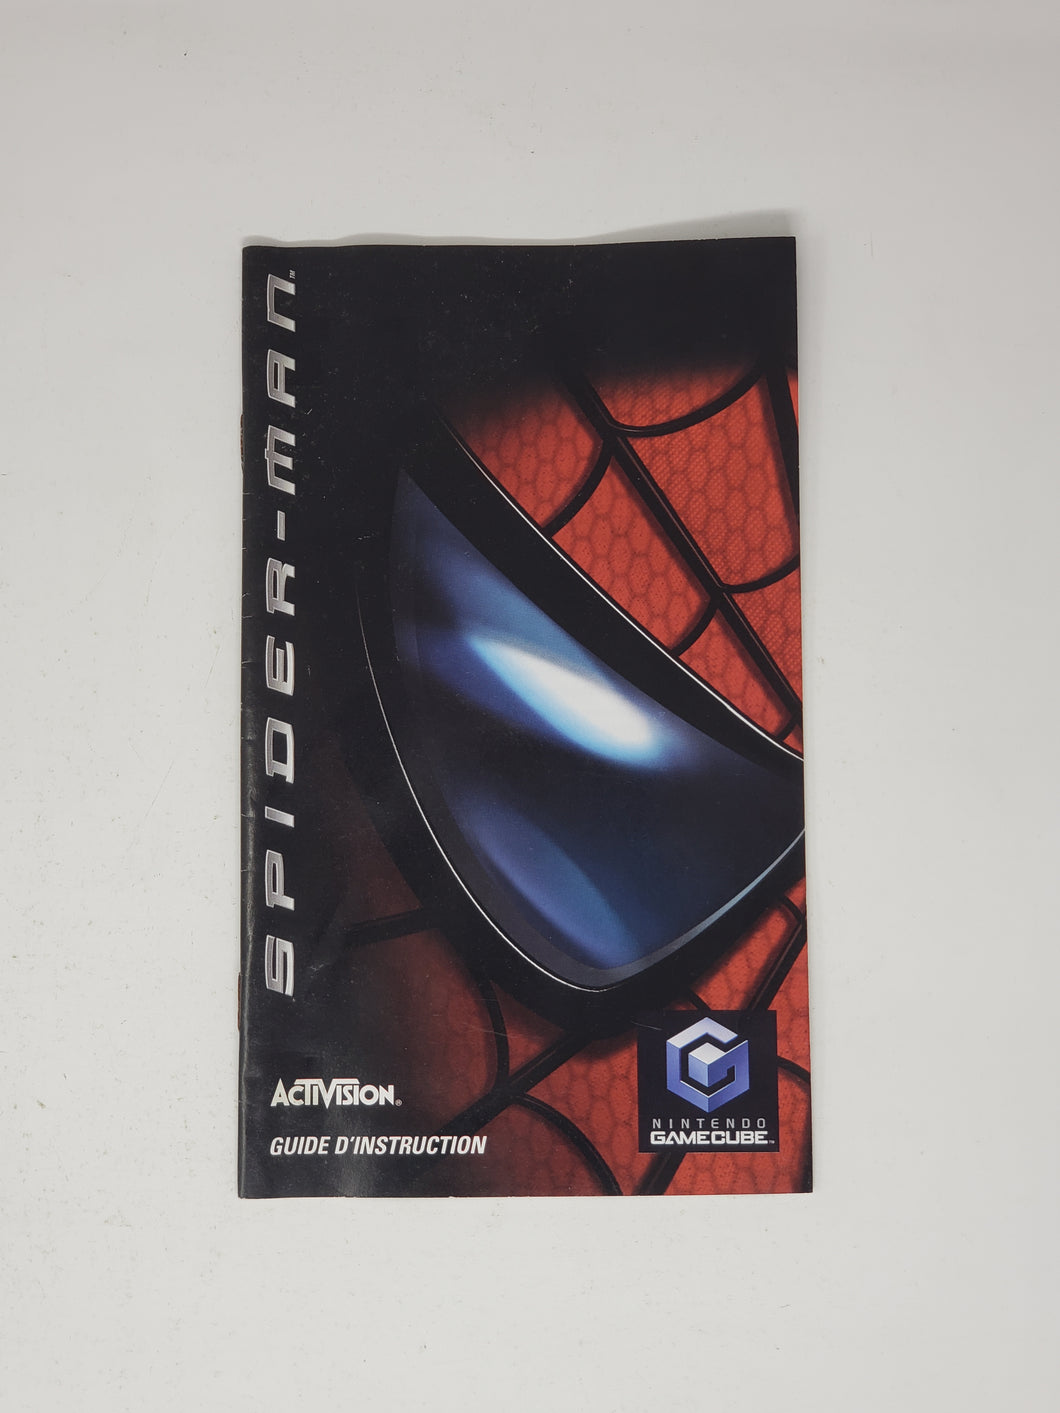 Spiderman [manual] - Nintendo GameCube